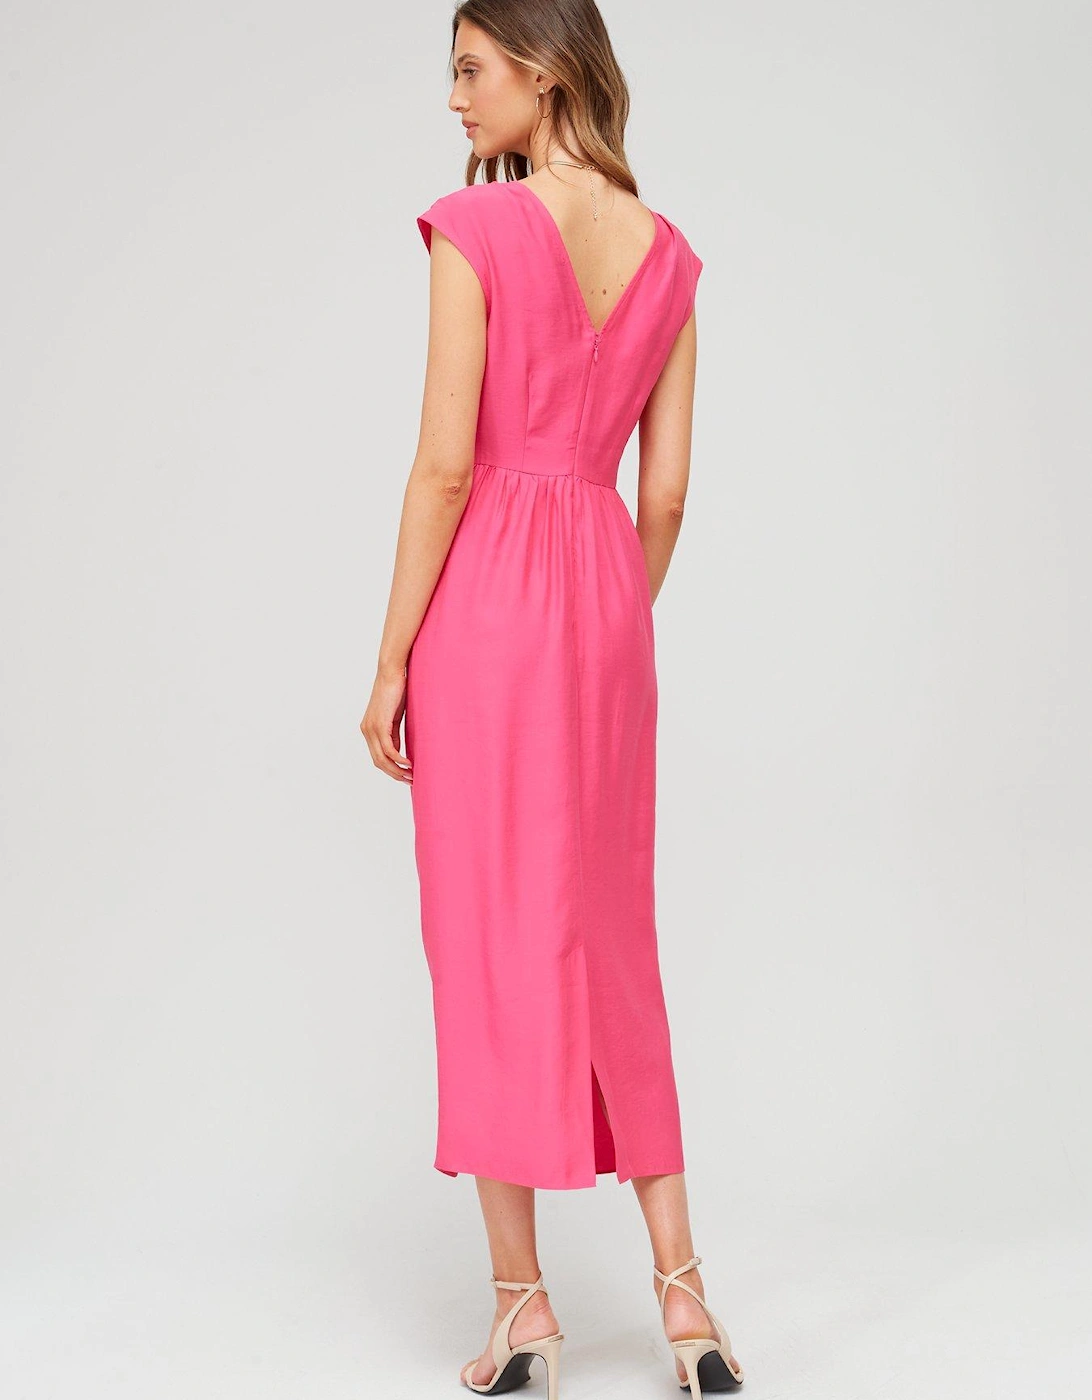 Twist Front Midaxi Dress - Pink